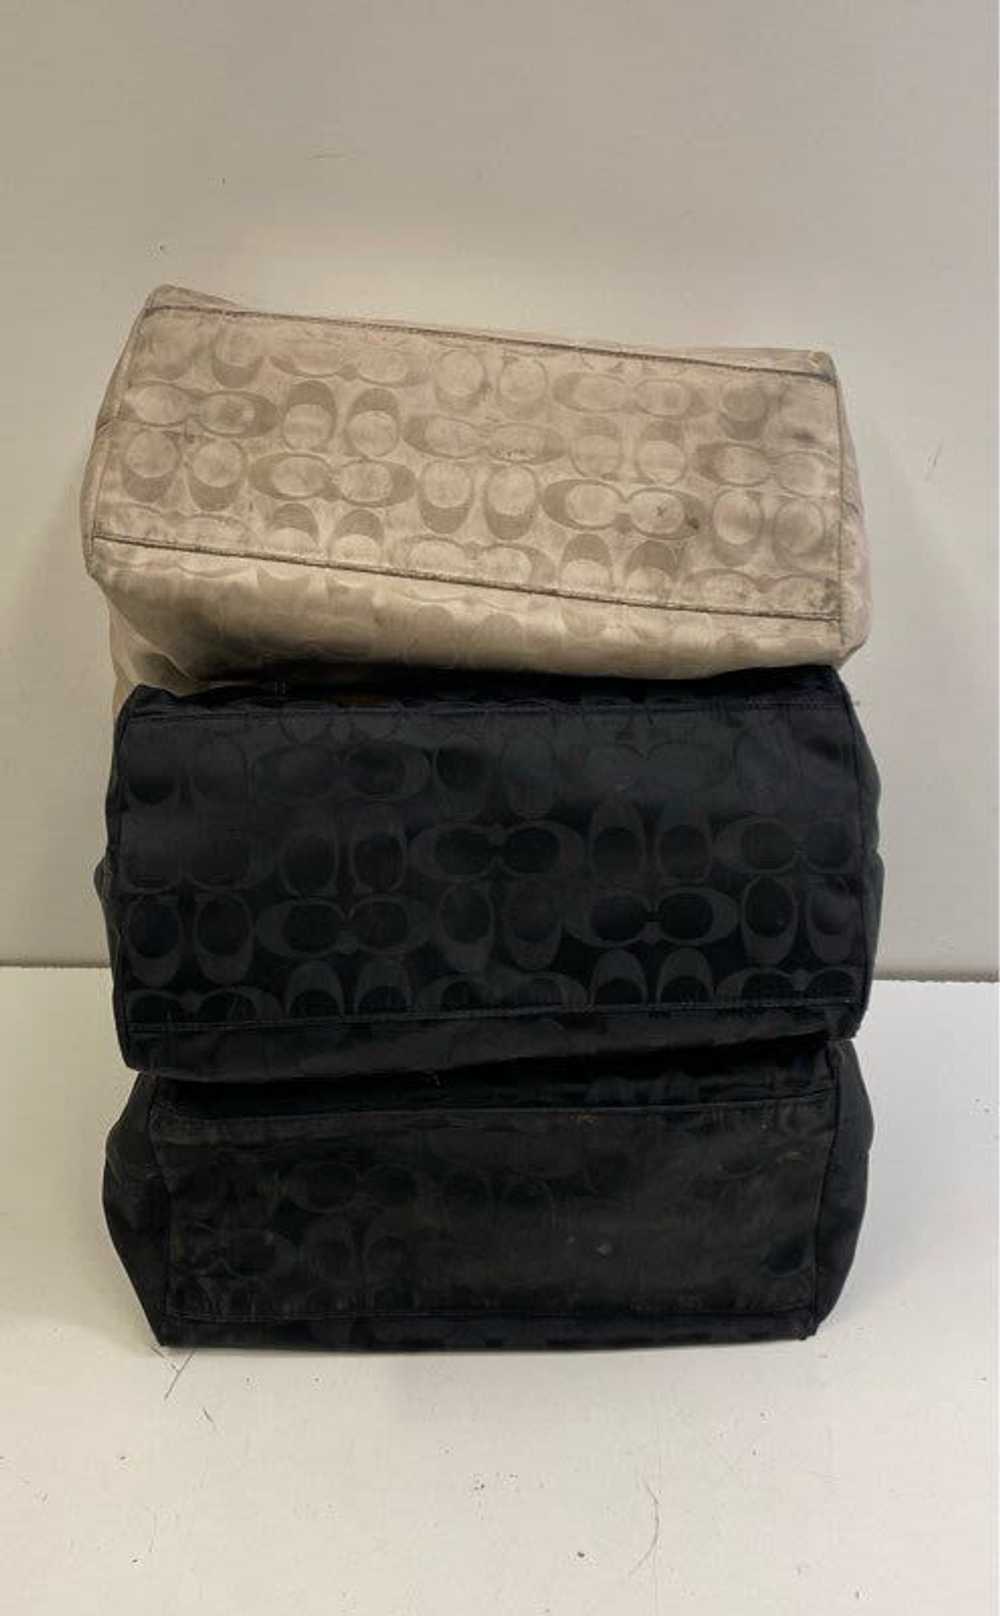 Coach Assorted Bundle Lot Set of 3 Handbags - image 3